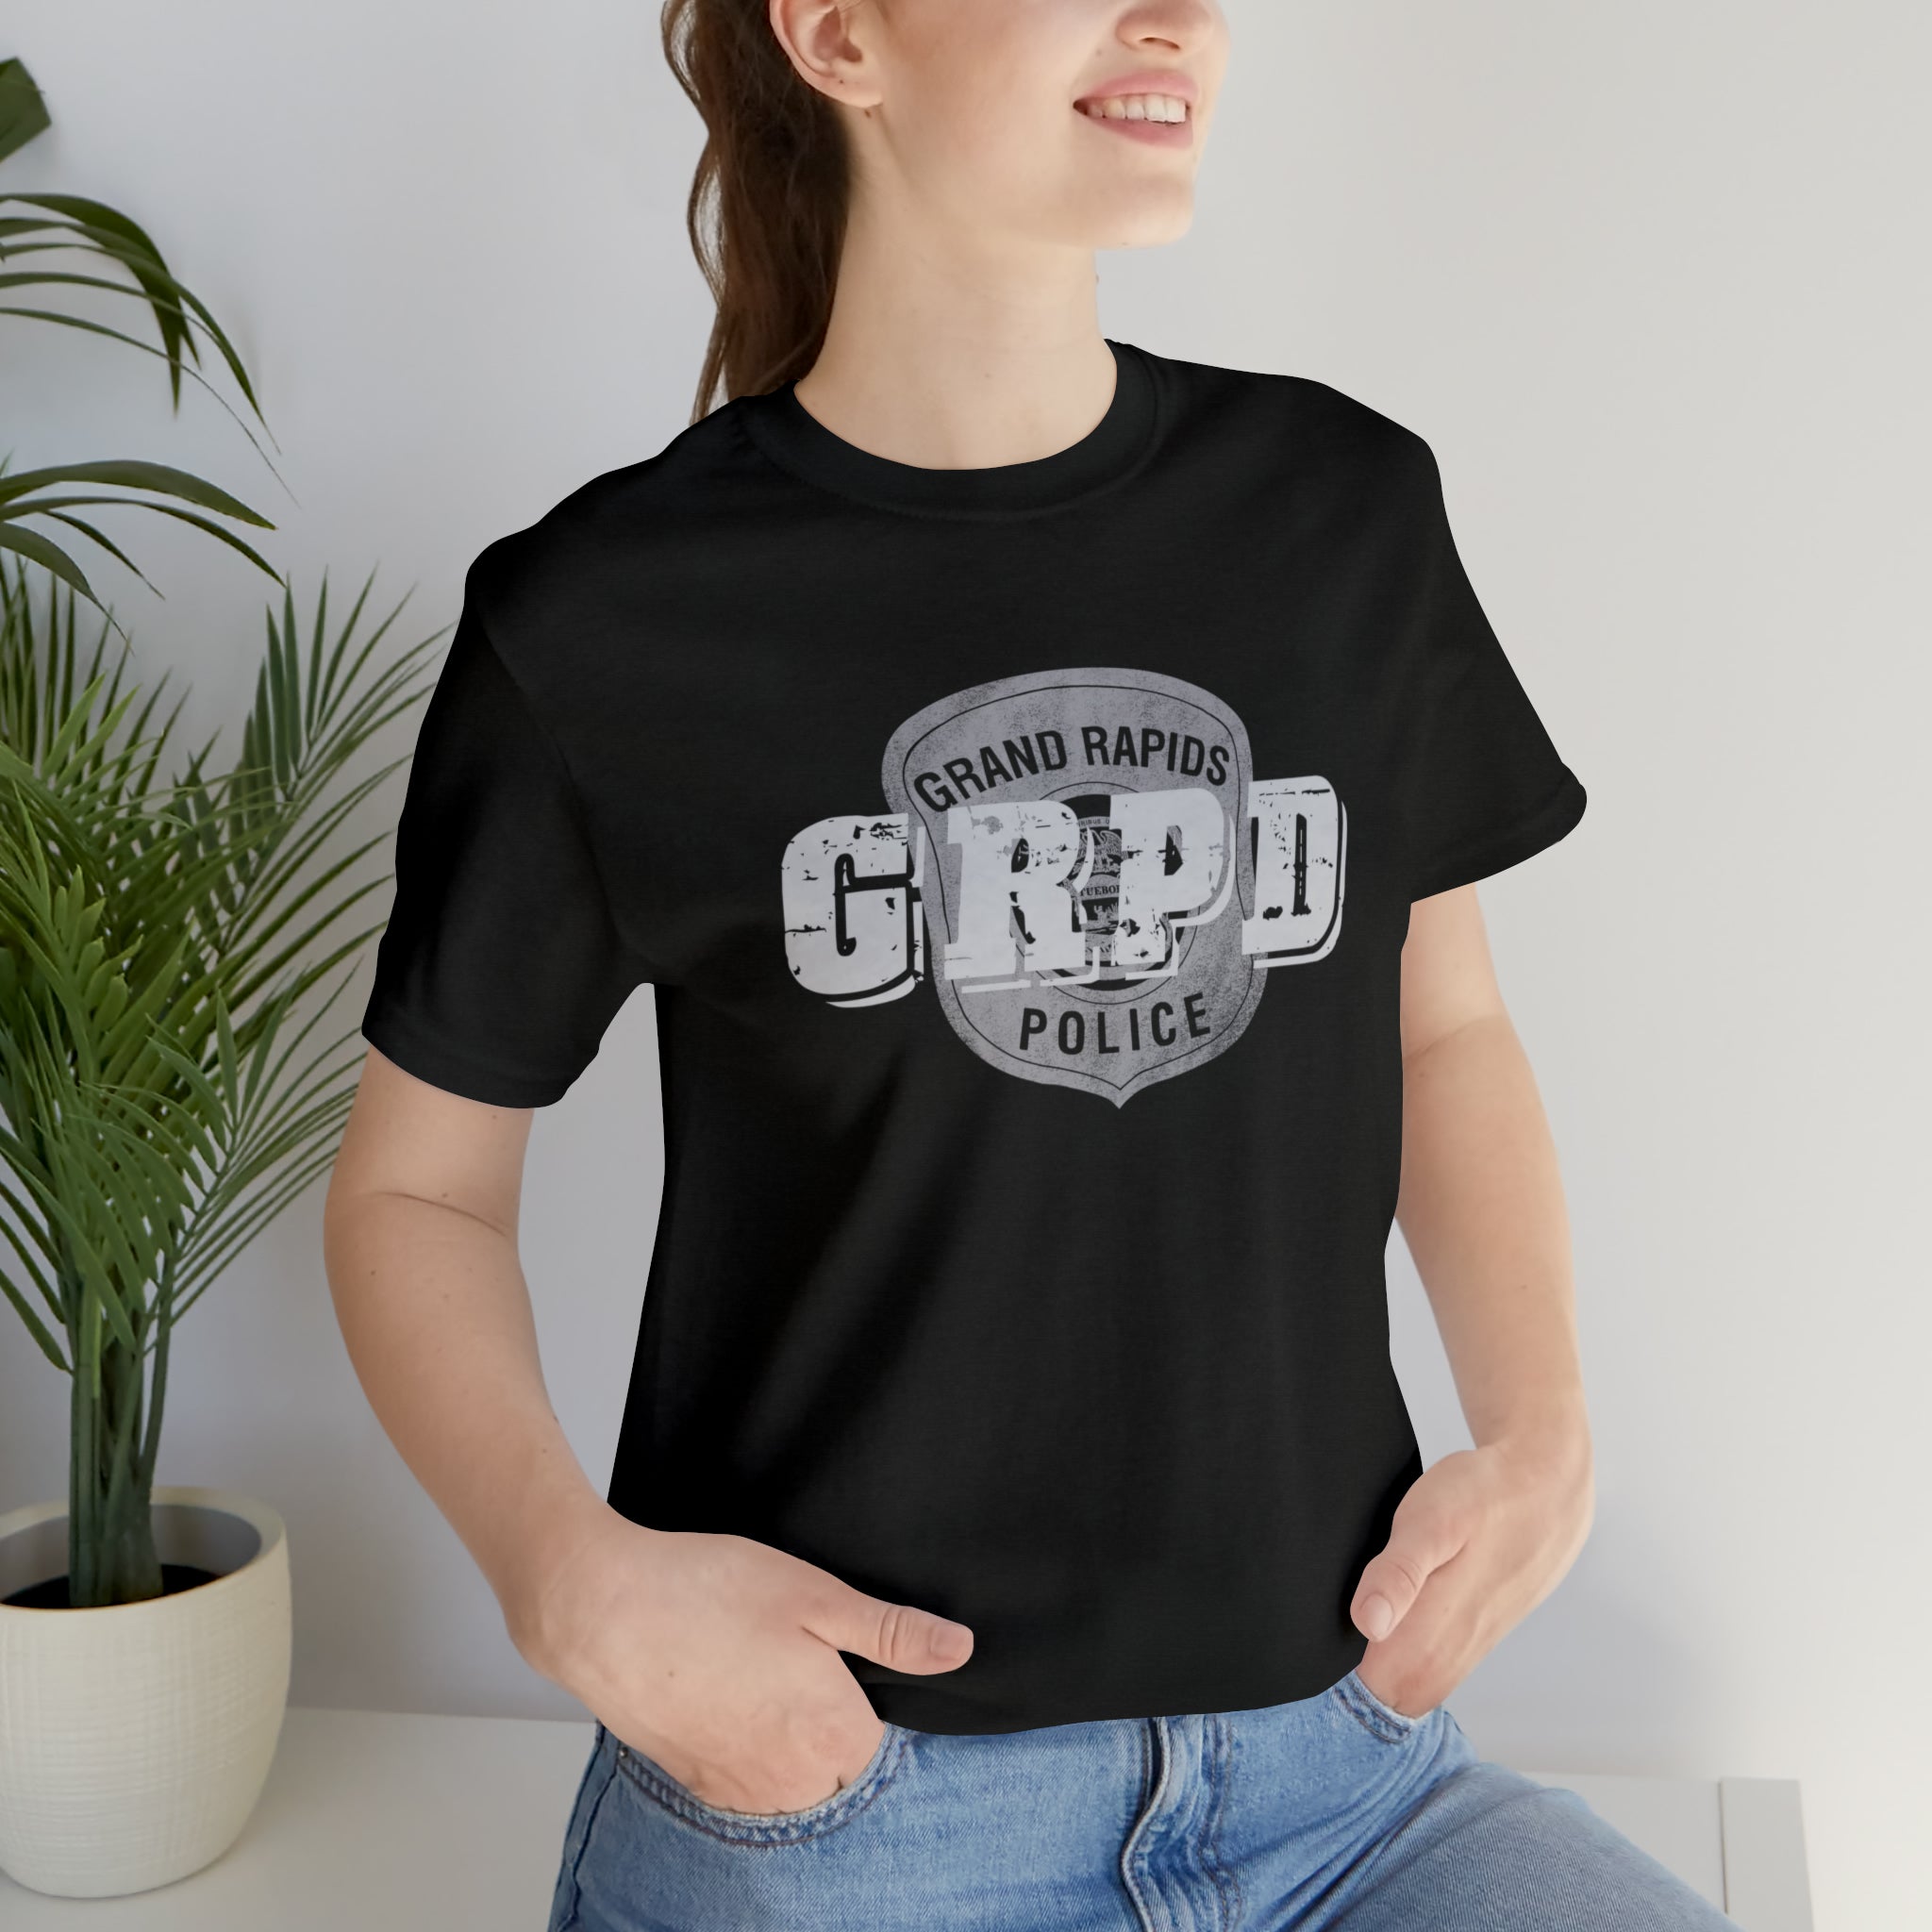 GRPD Badge T-Shirt